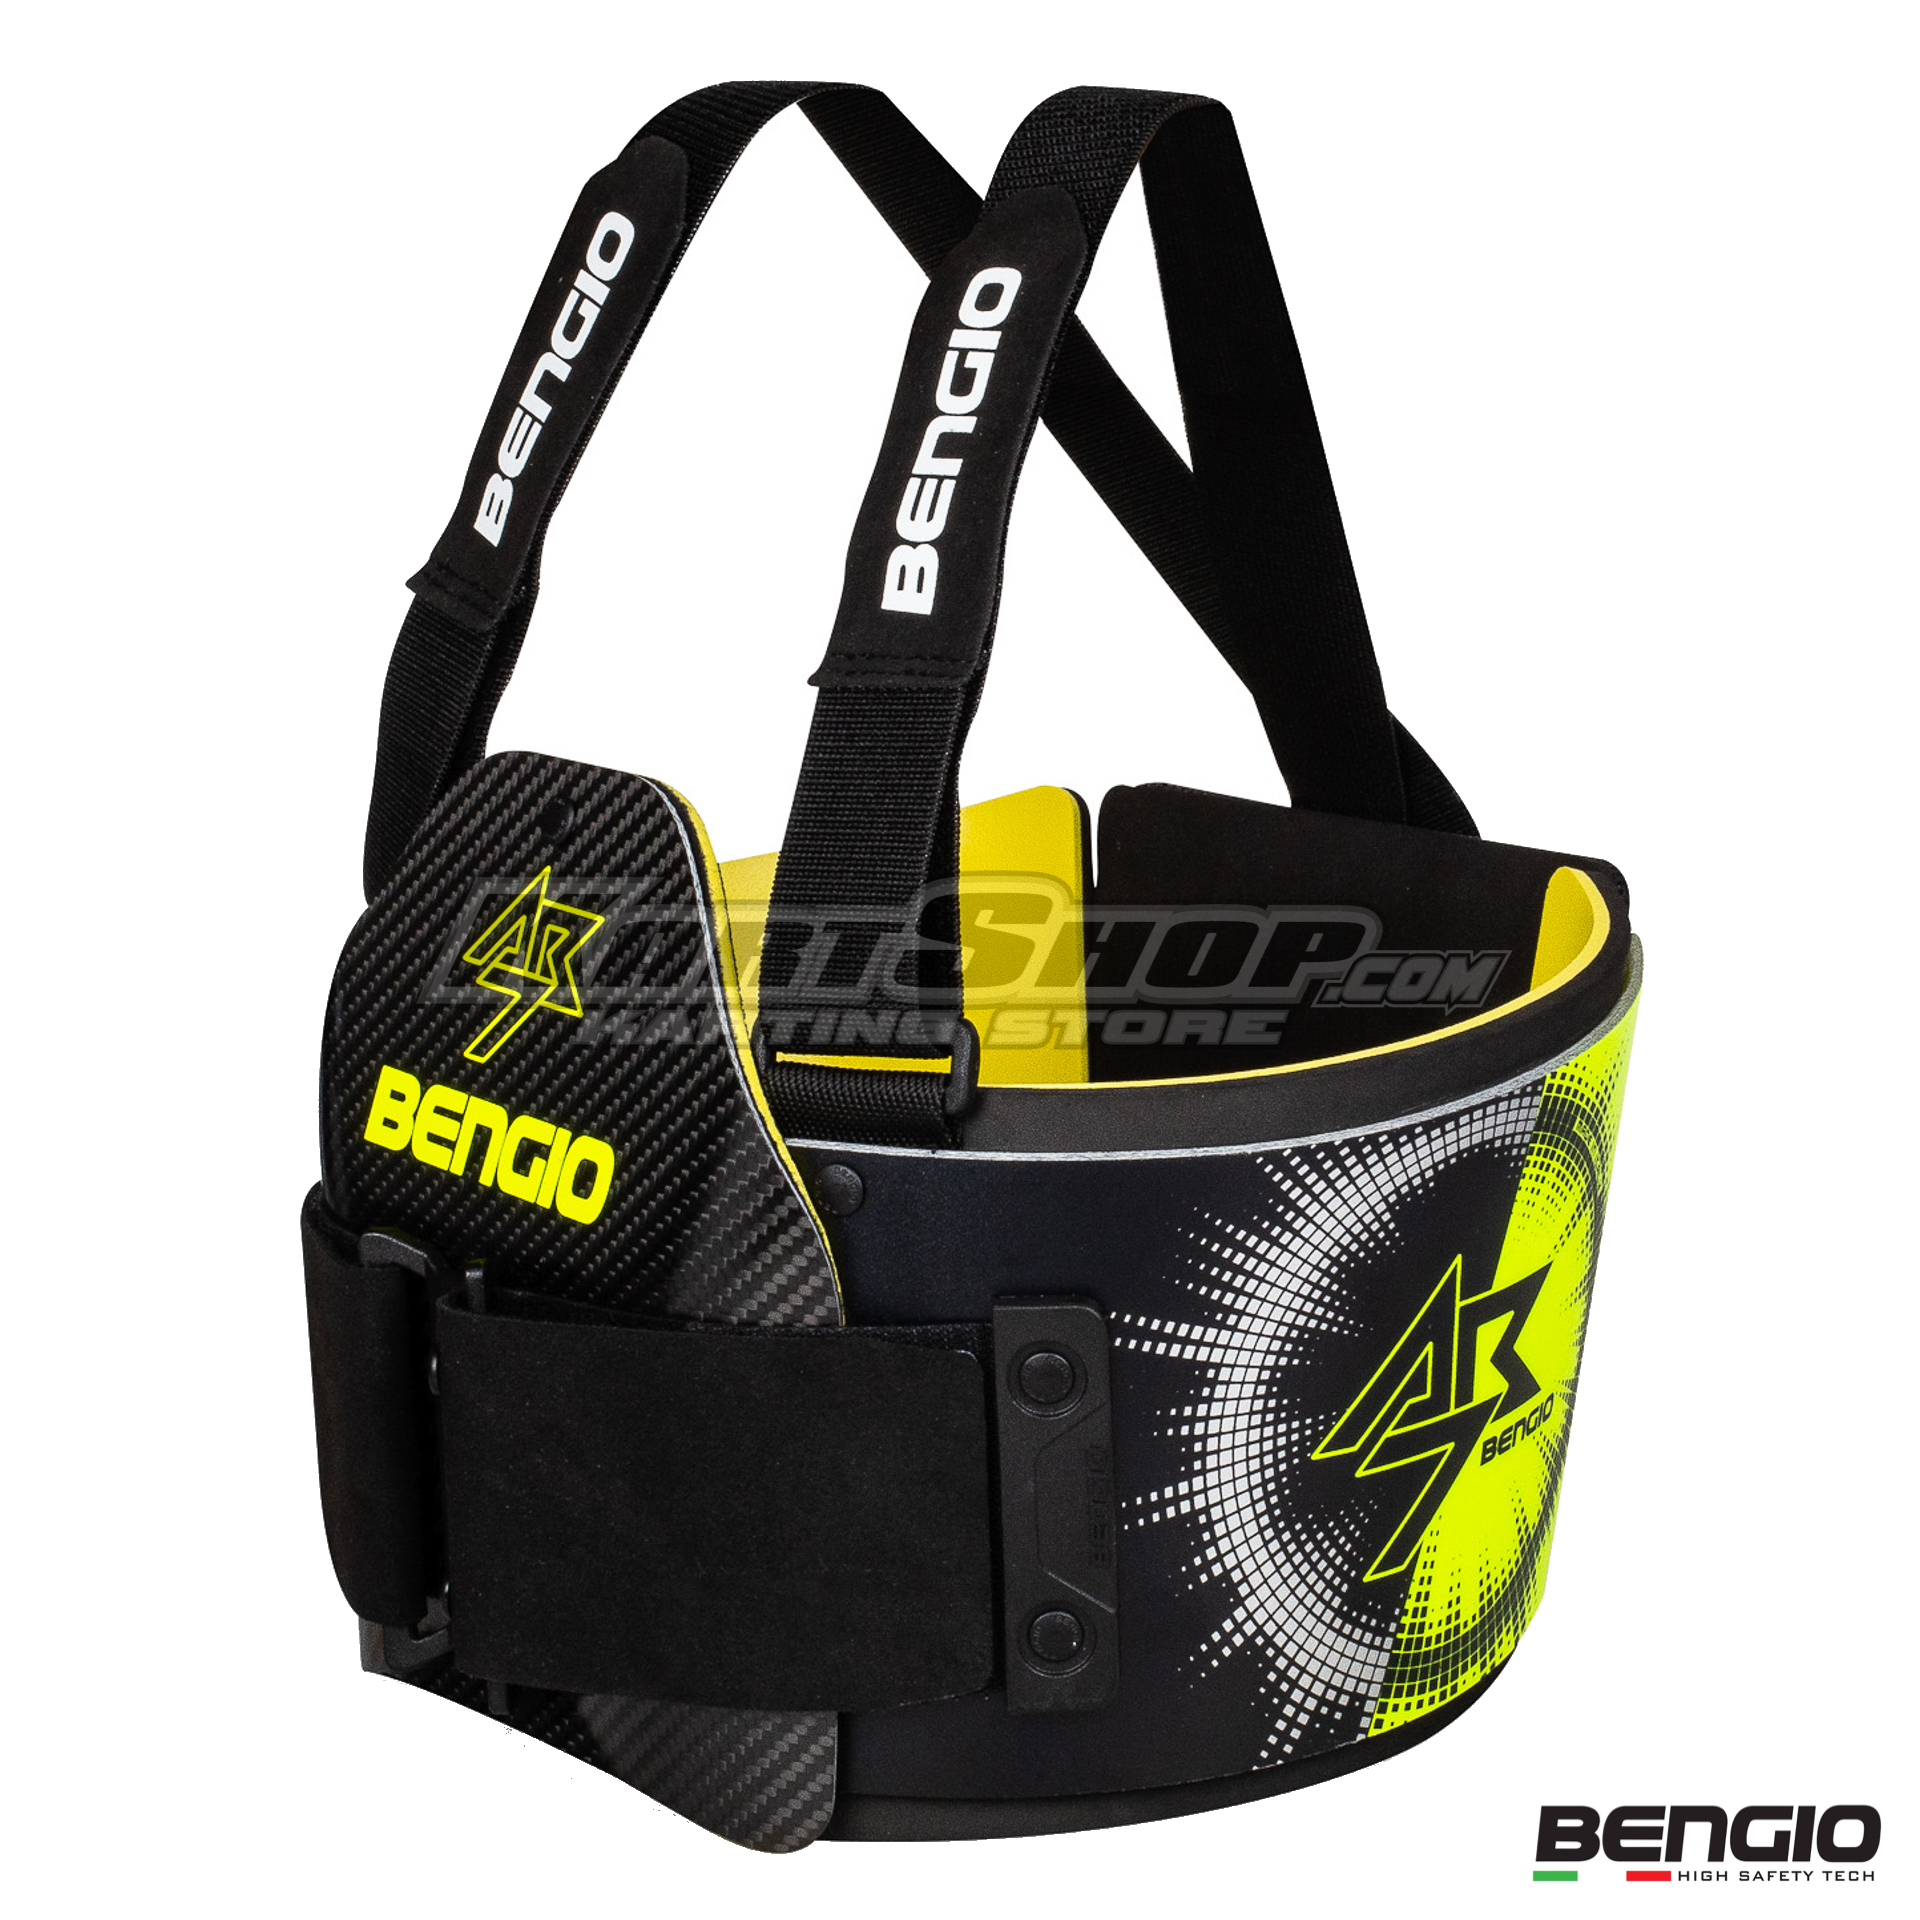 Bengio AB7 Rib Protector, CIK Homologated, Size SM+